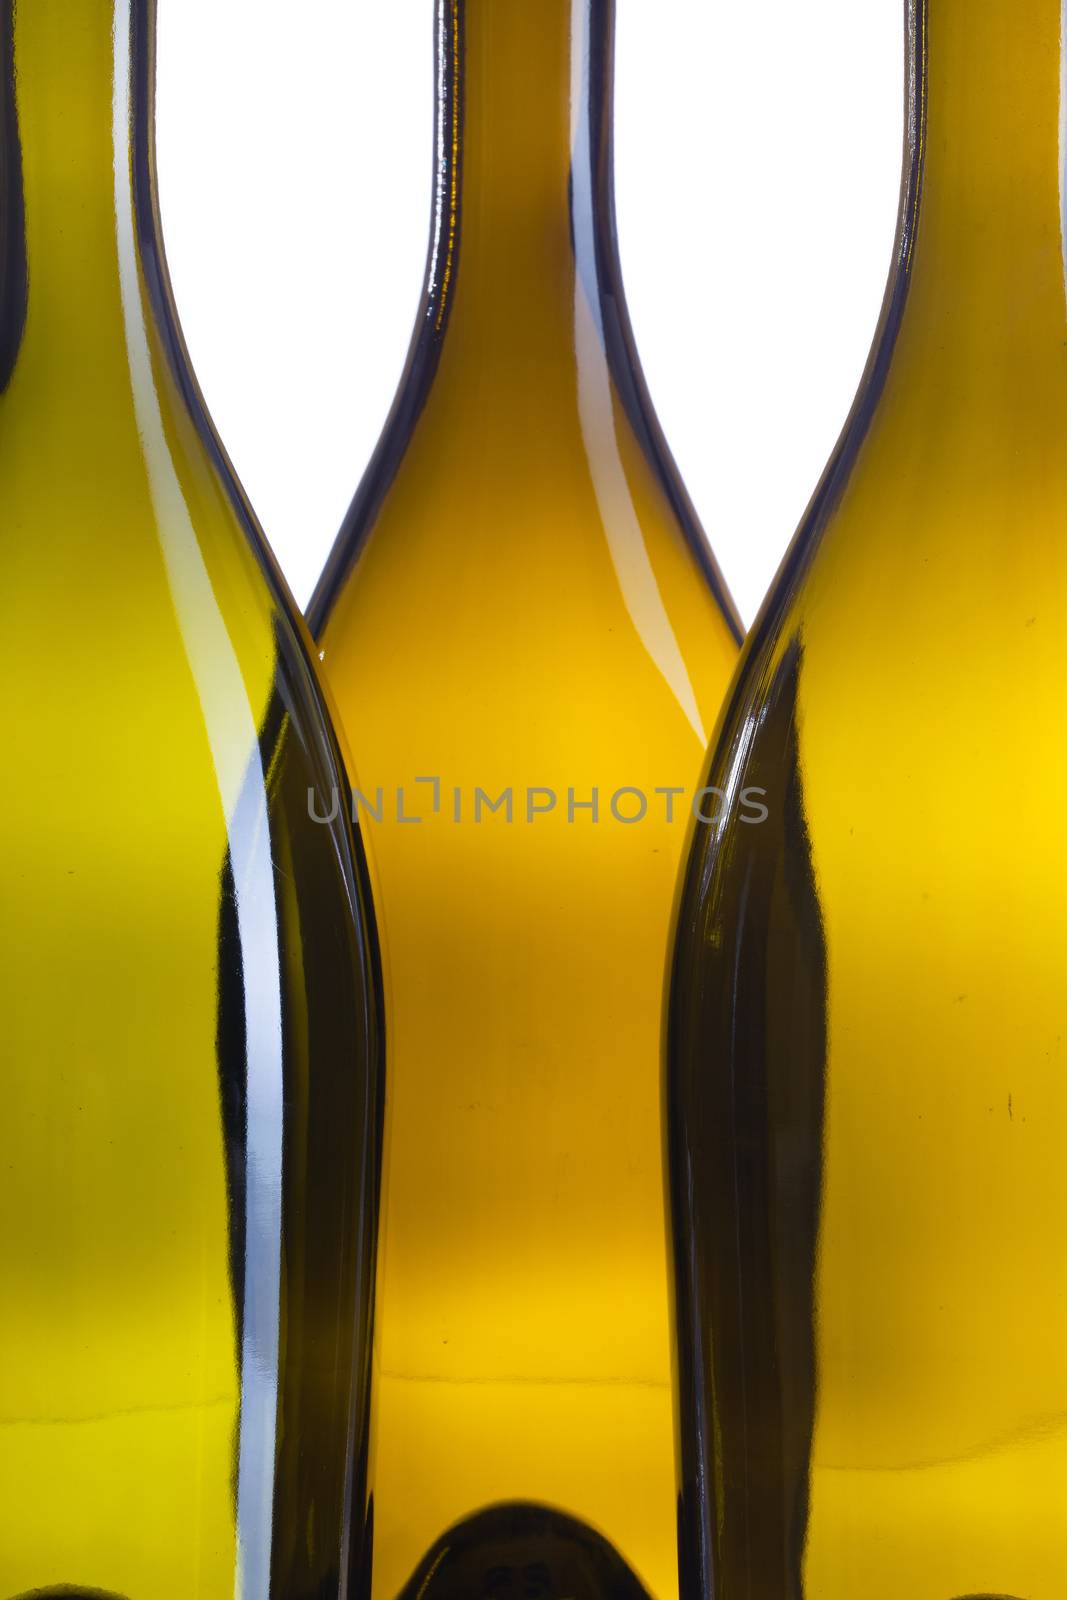 Detail of three empty wine bottles by CaptureLight